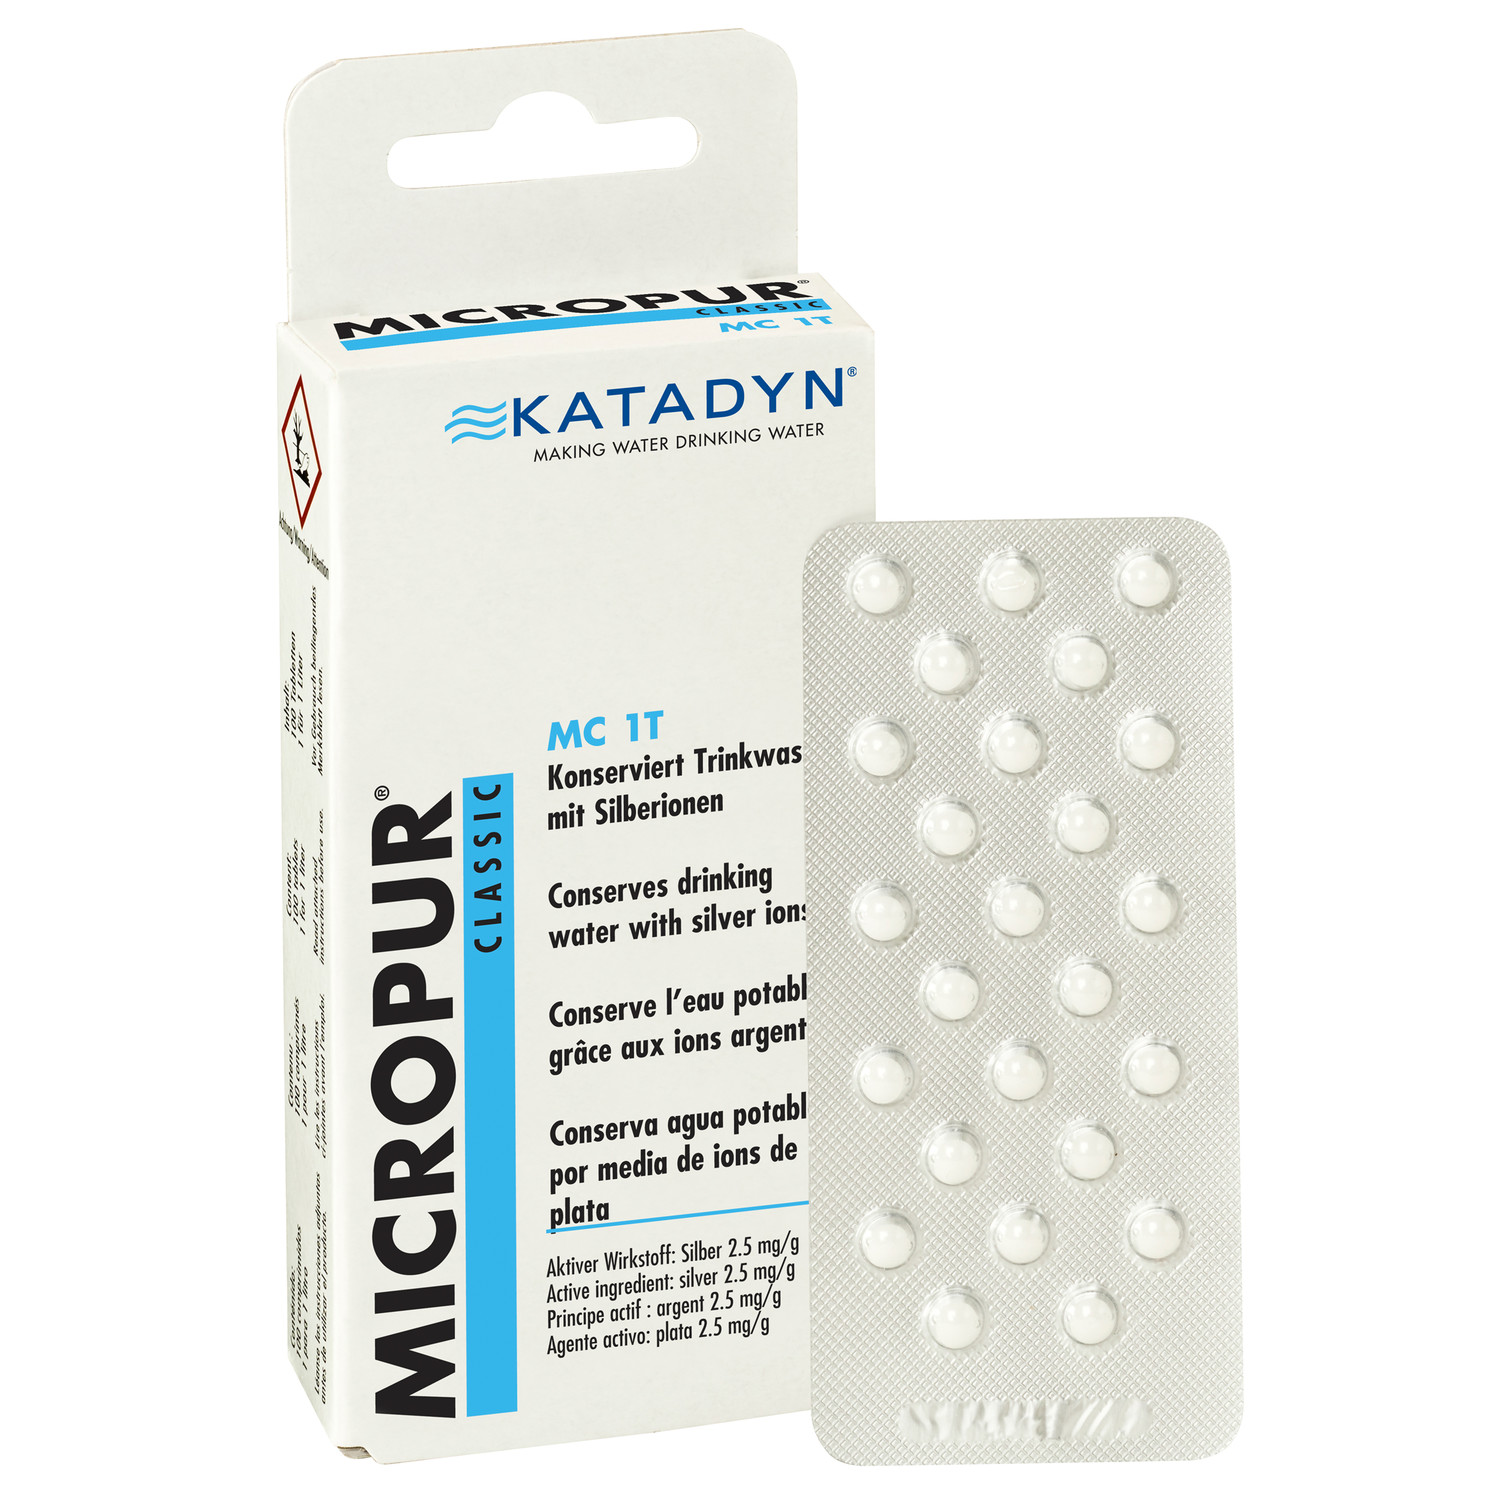 Katadyn Micropur Classic Trinkwasserkonservierung MC 1T 50 Tabletten